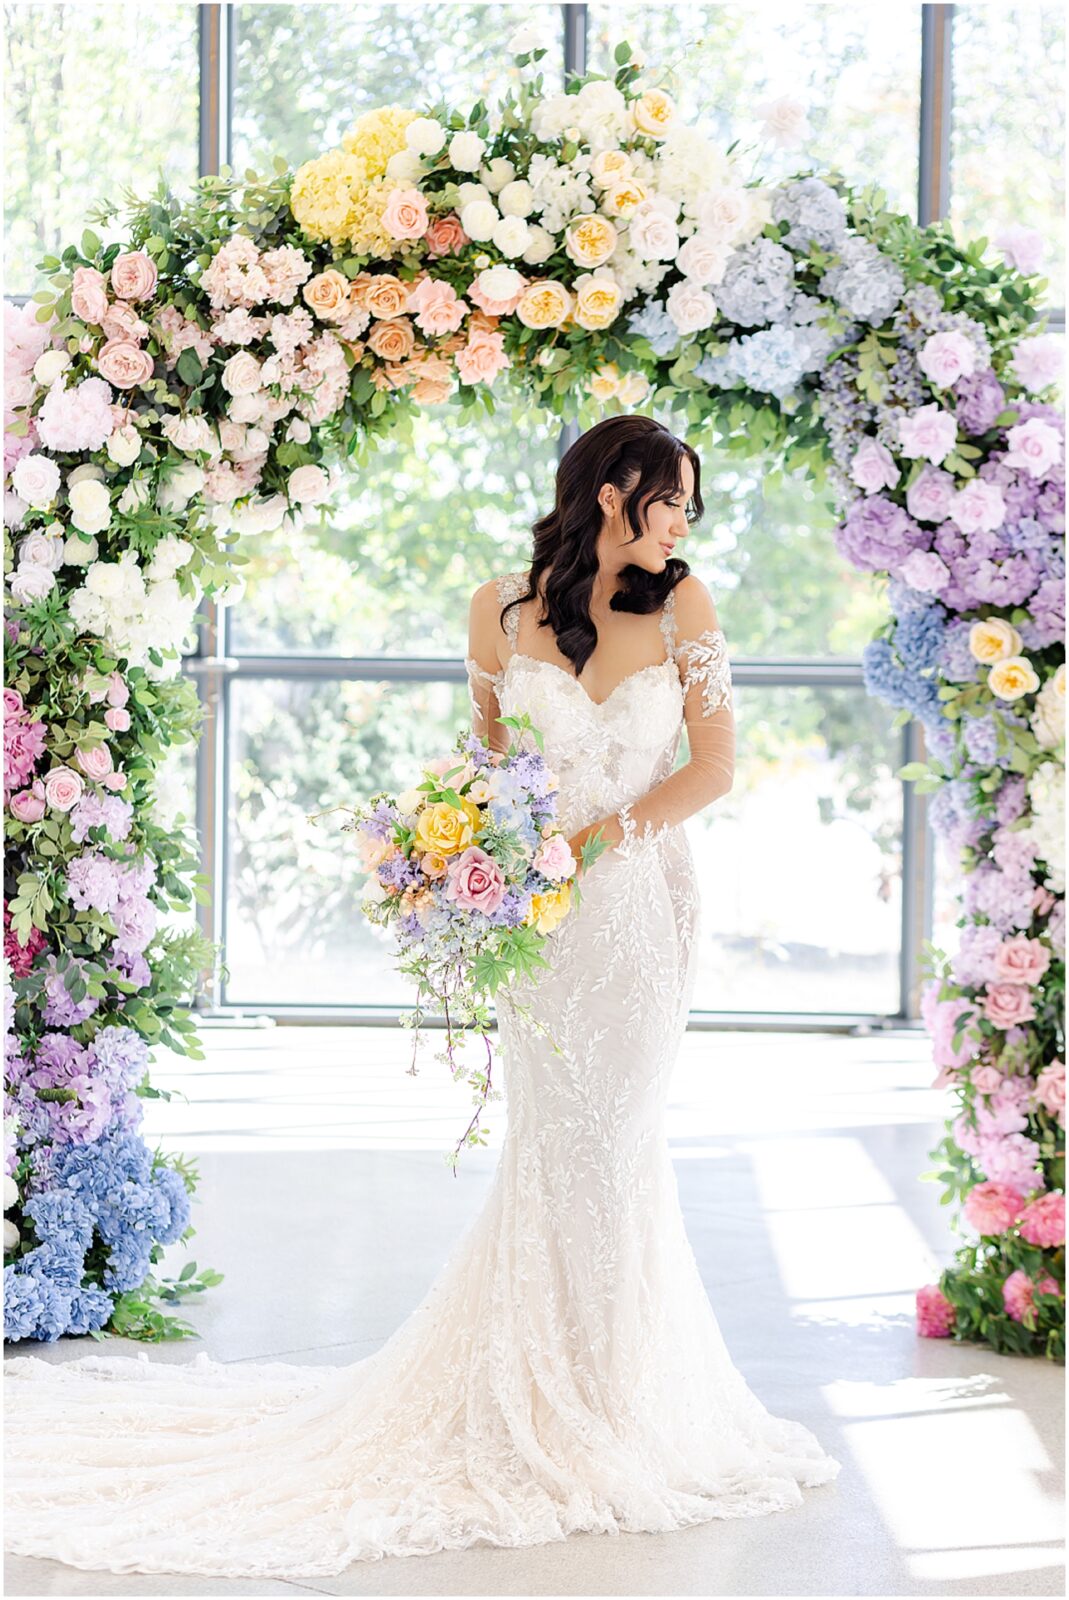 stunning wedding photo - beautiful colorful flowers